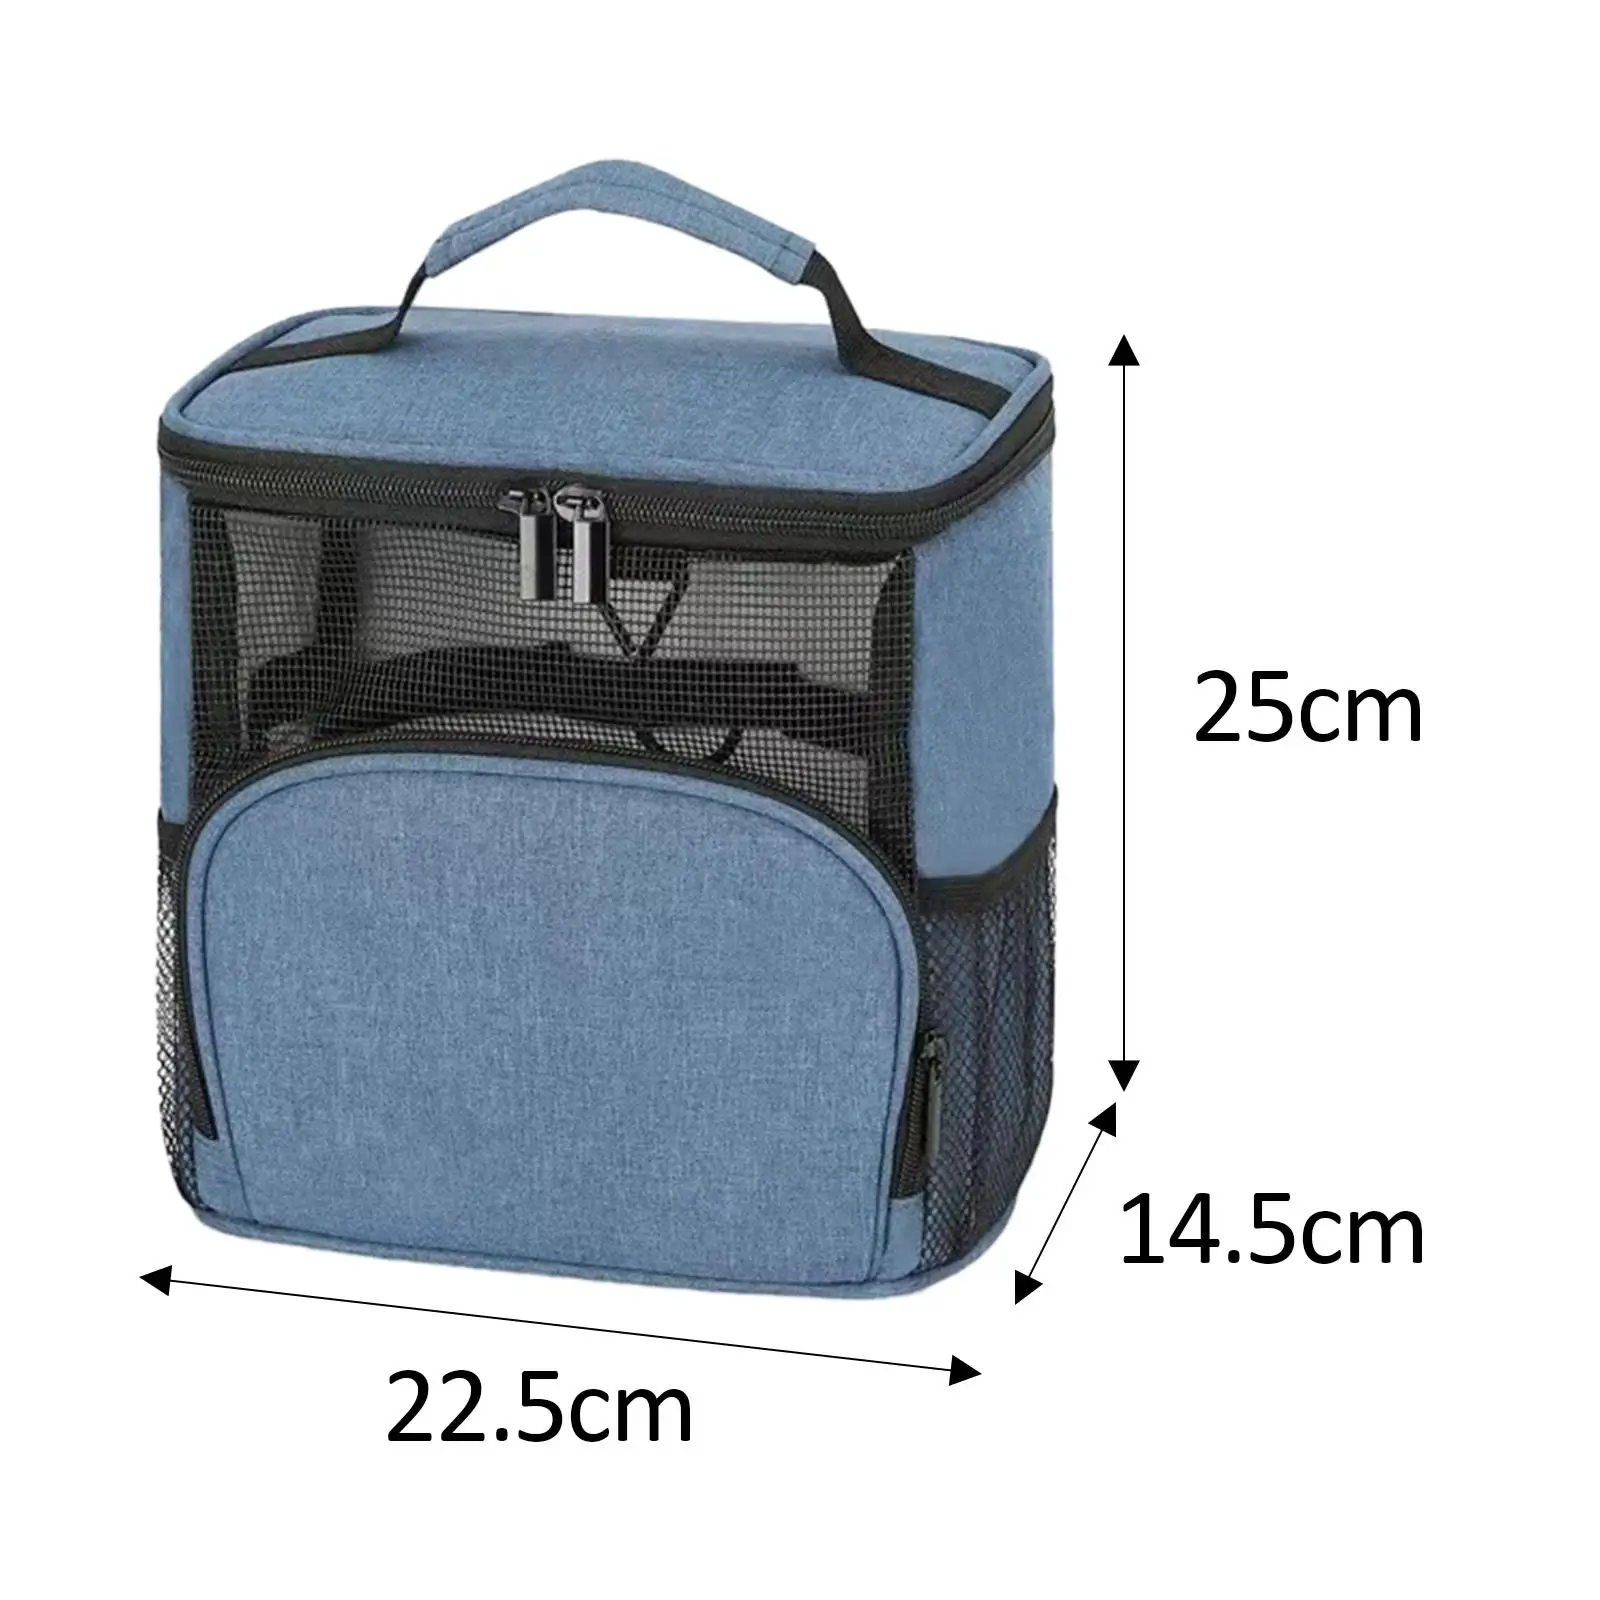 Mesh Toiletries Bag, Hanging Toiletry Bag, Wash Bag, Travel Essentials